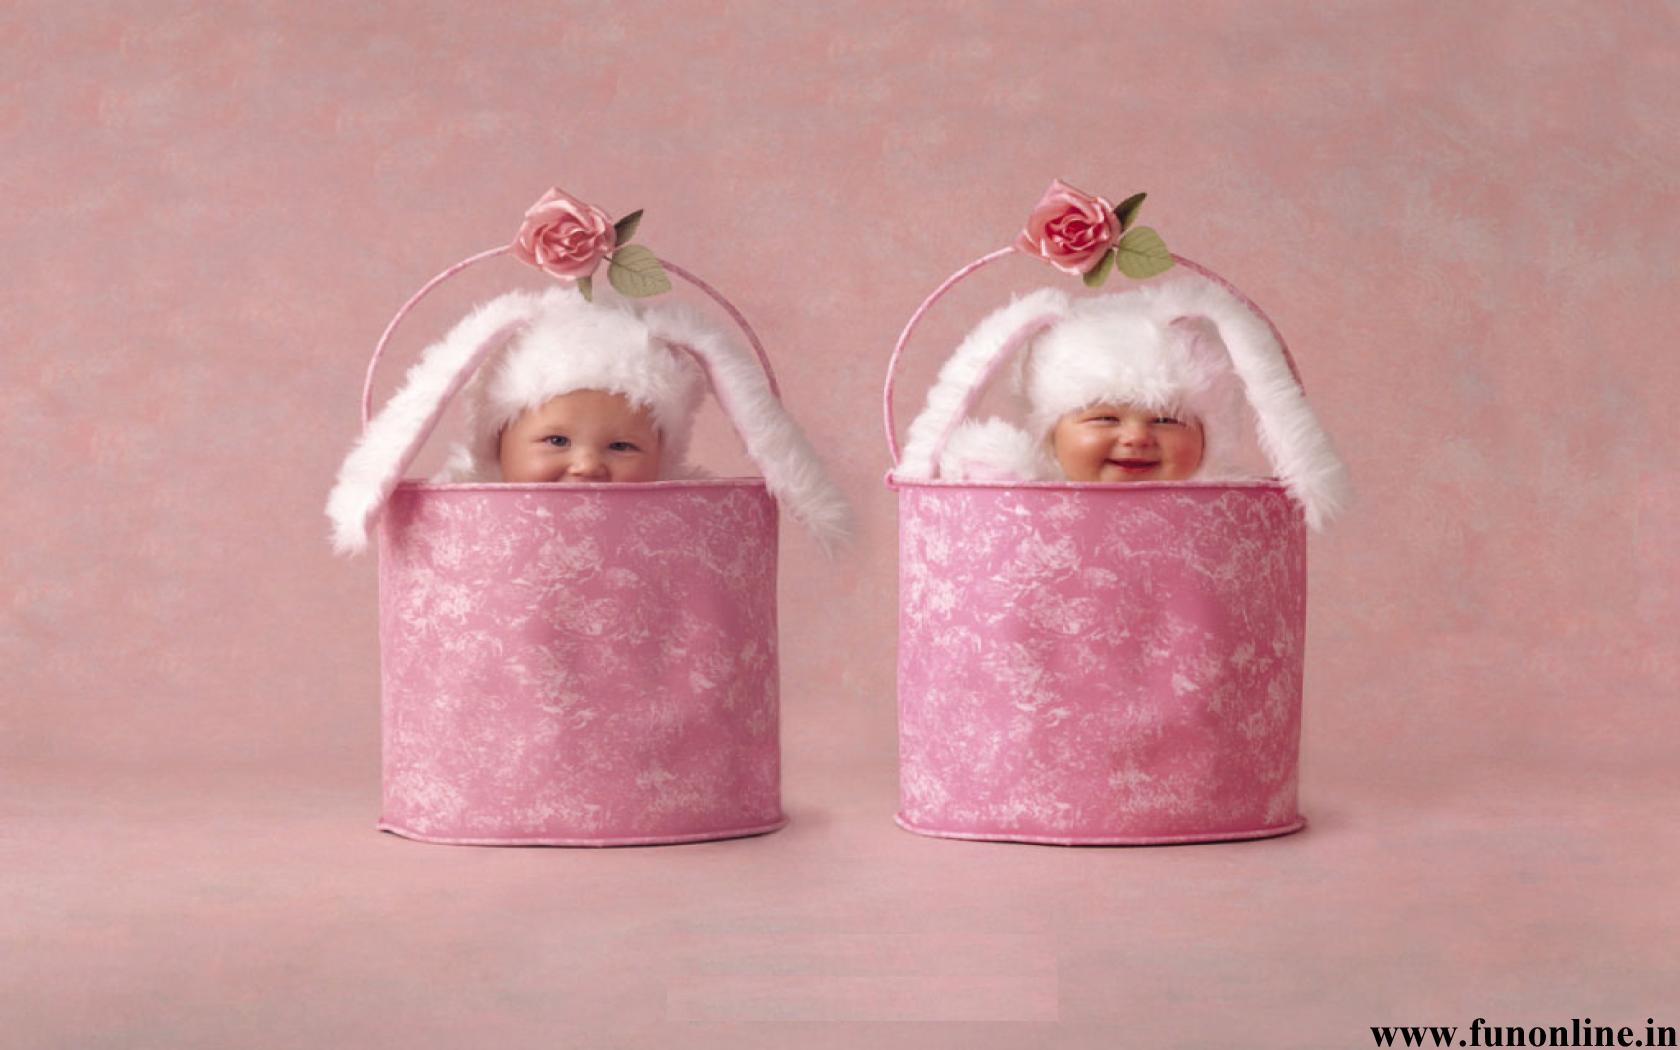 Cute Twin Babies In Bunny Costume Sitting In Basket Wallpaper